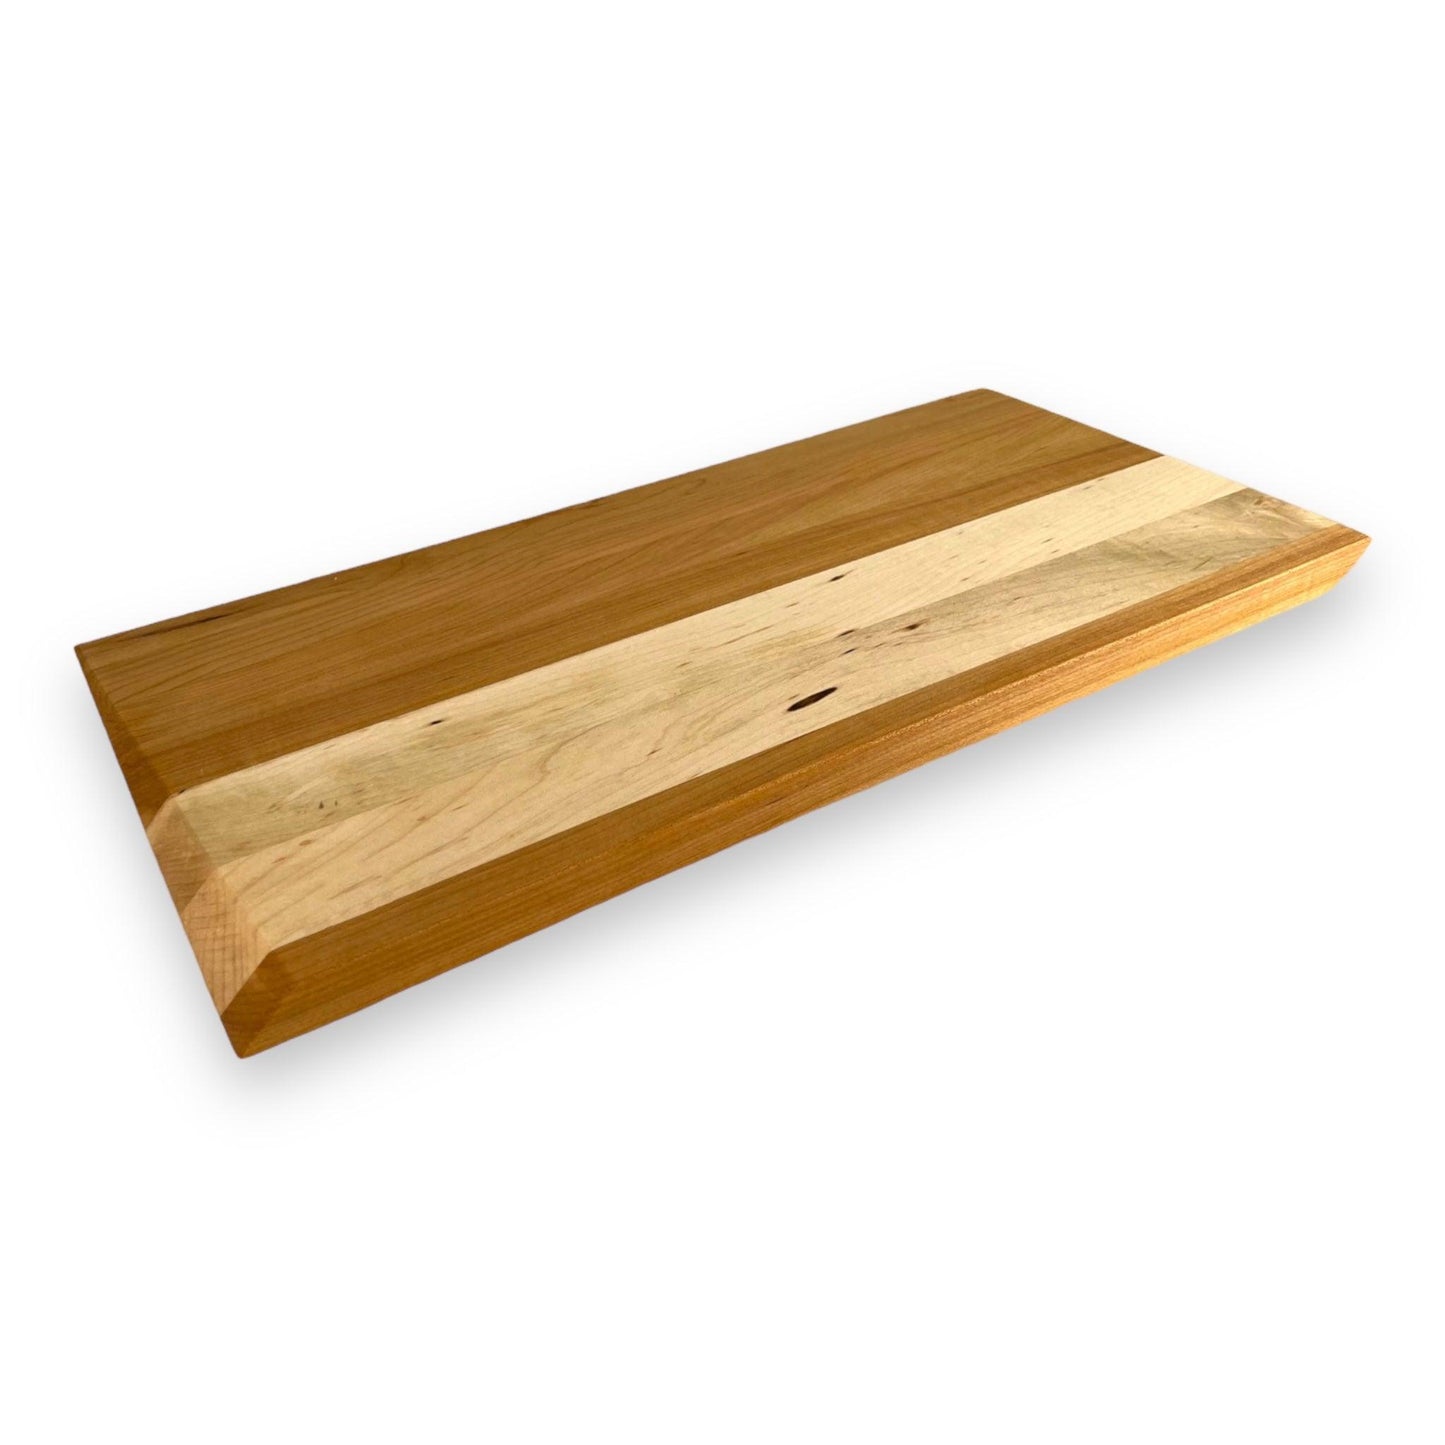 Cherry wood serving platter, "Z" cut - BOISWOOD